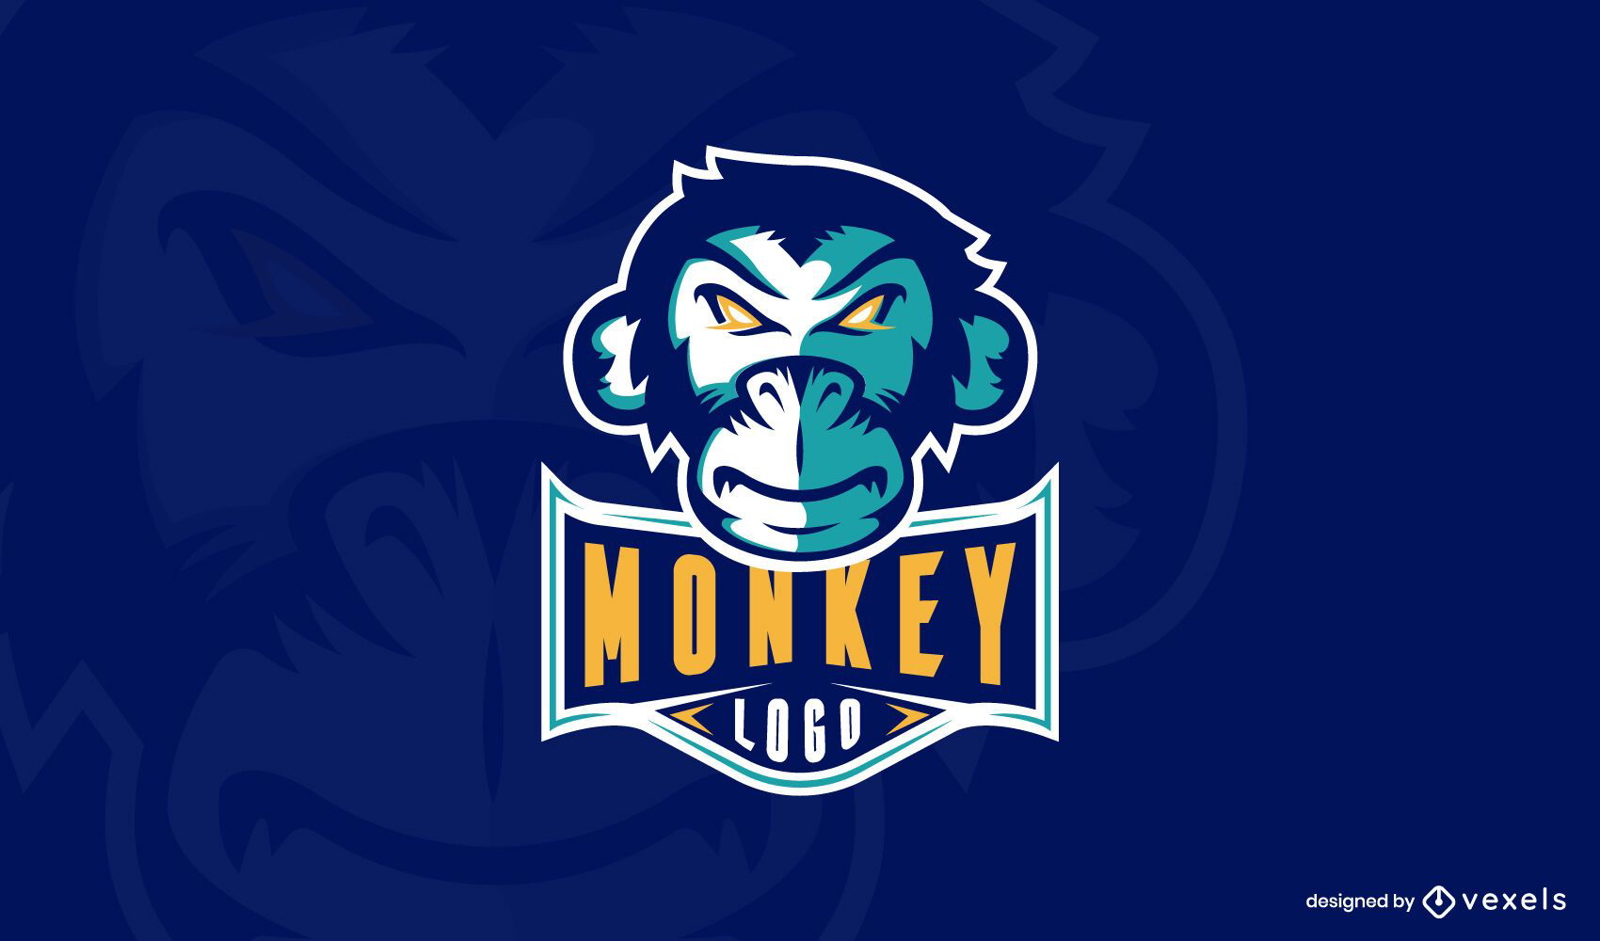 Monkey head logo design